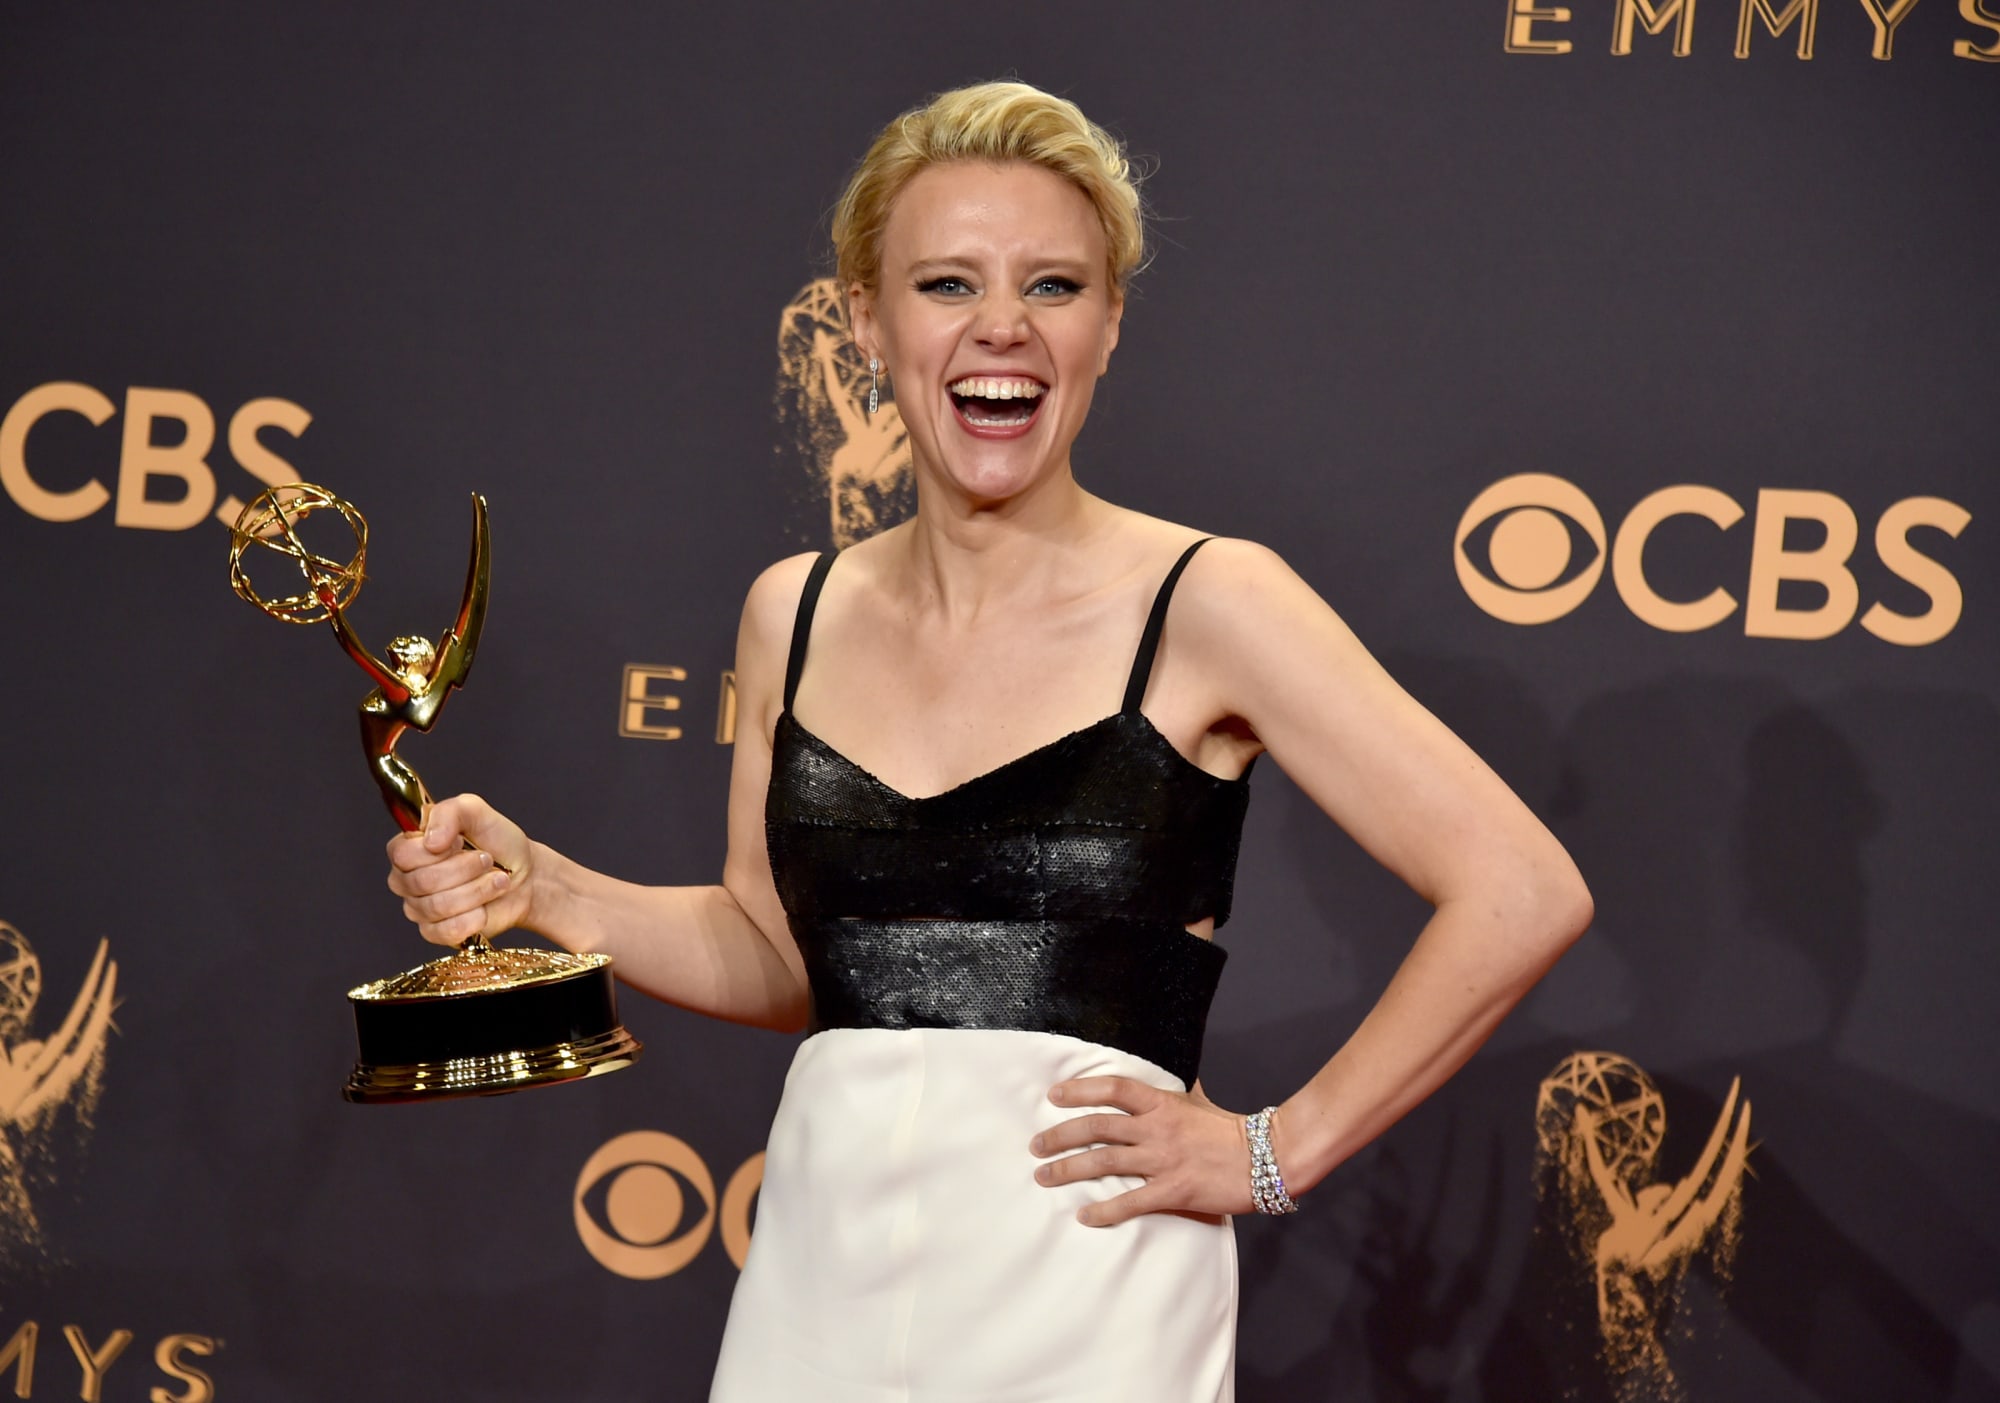 Emmys Saturday Night Live celebrates its nominees